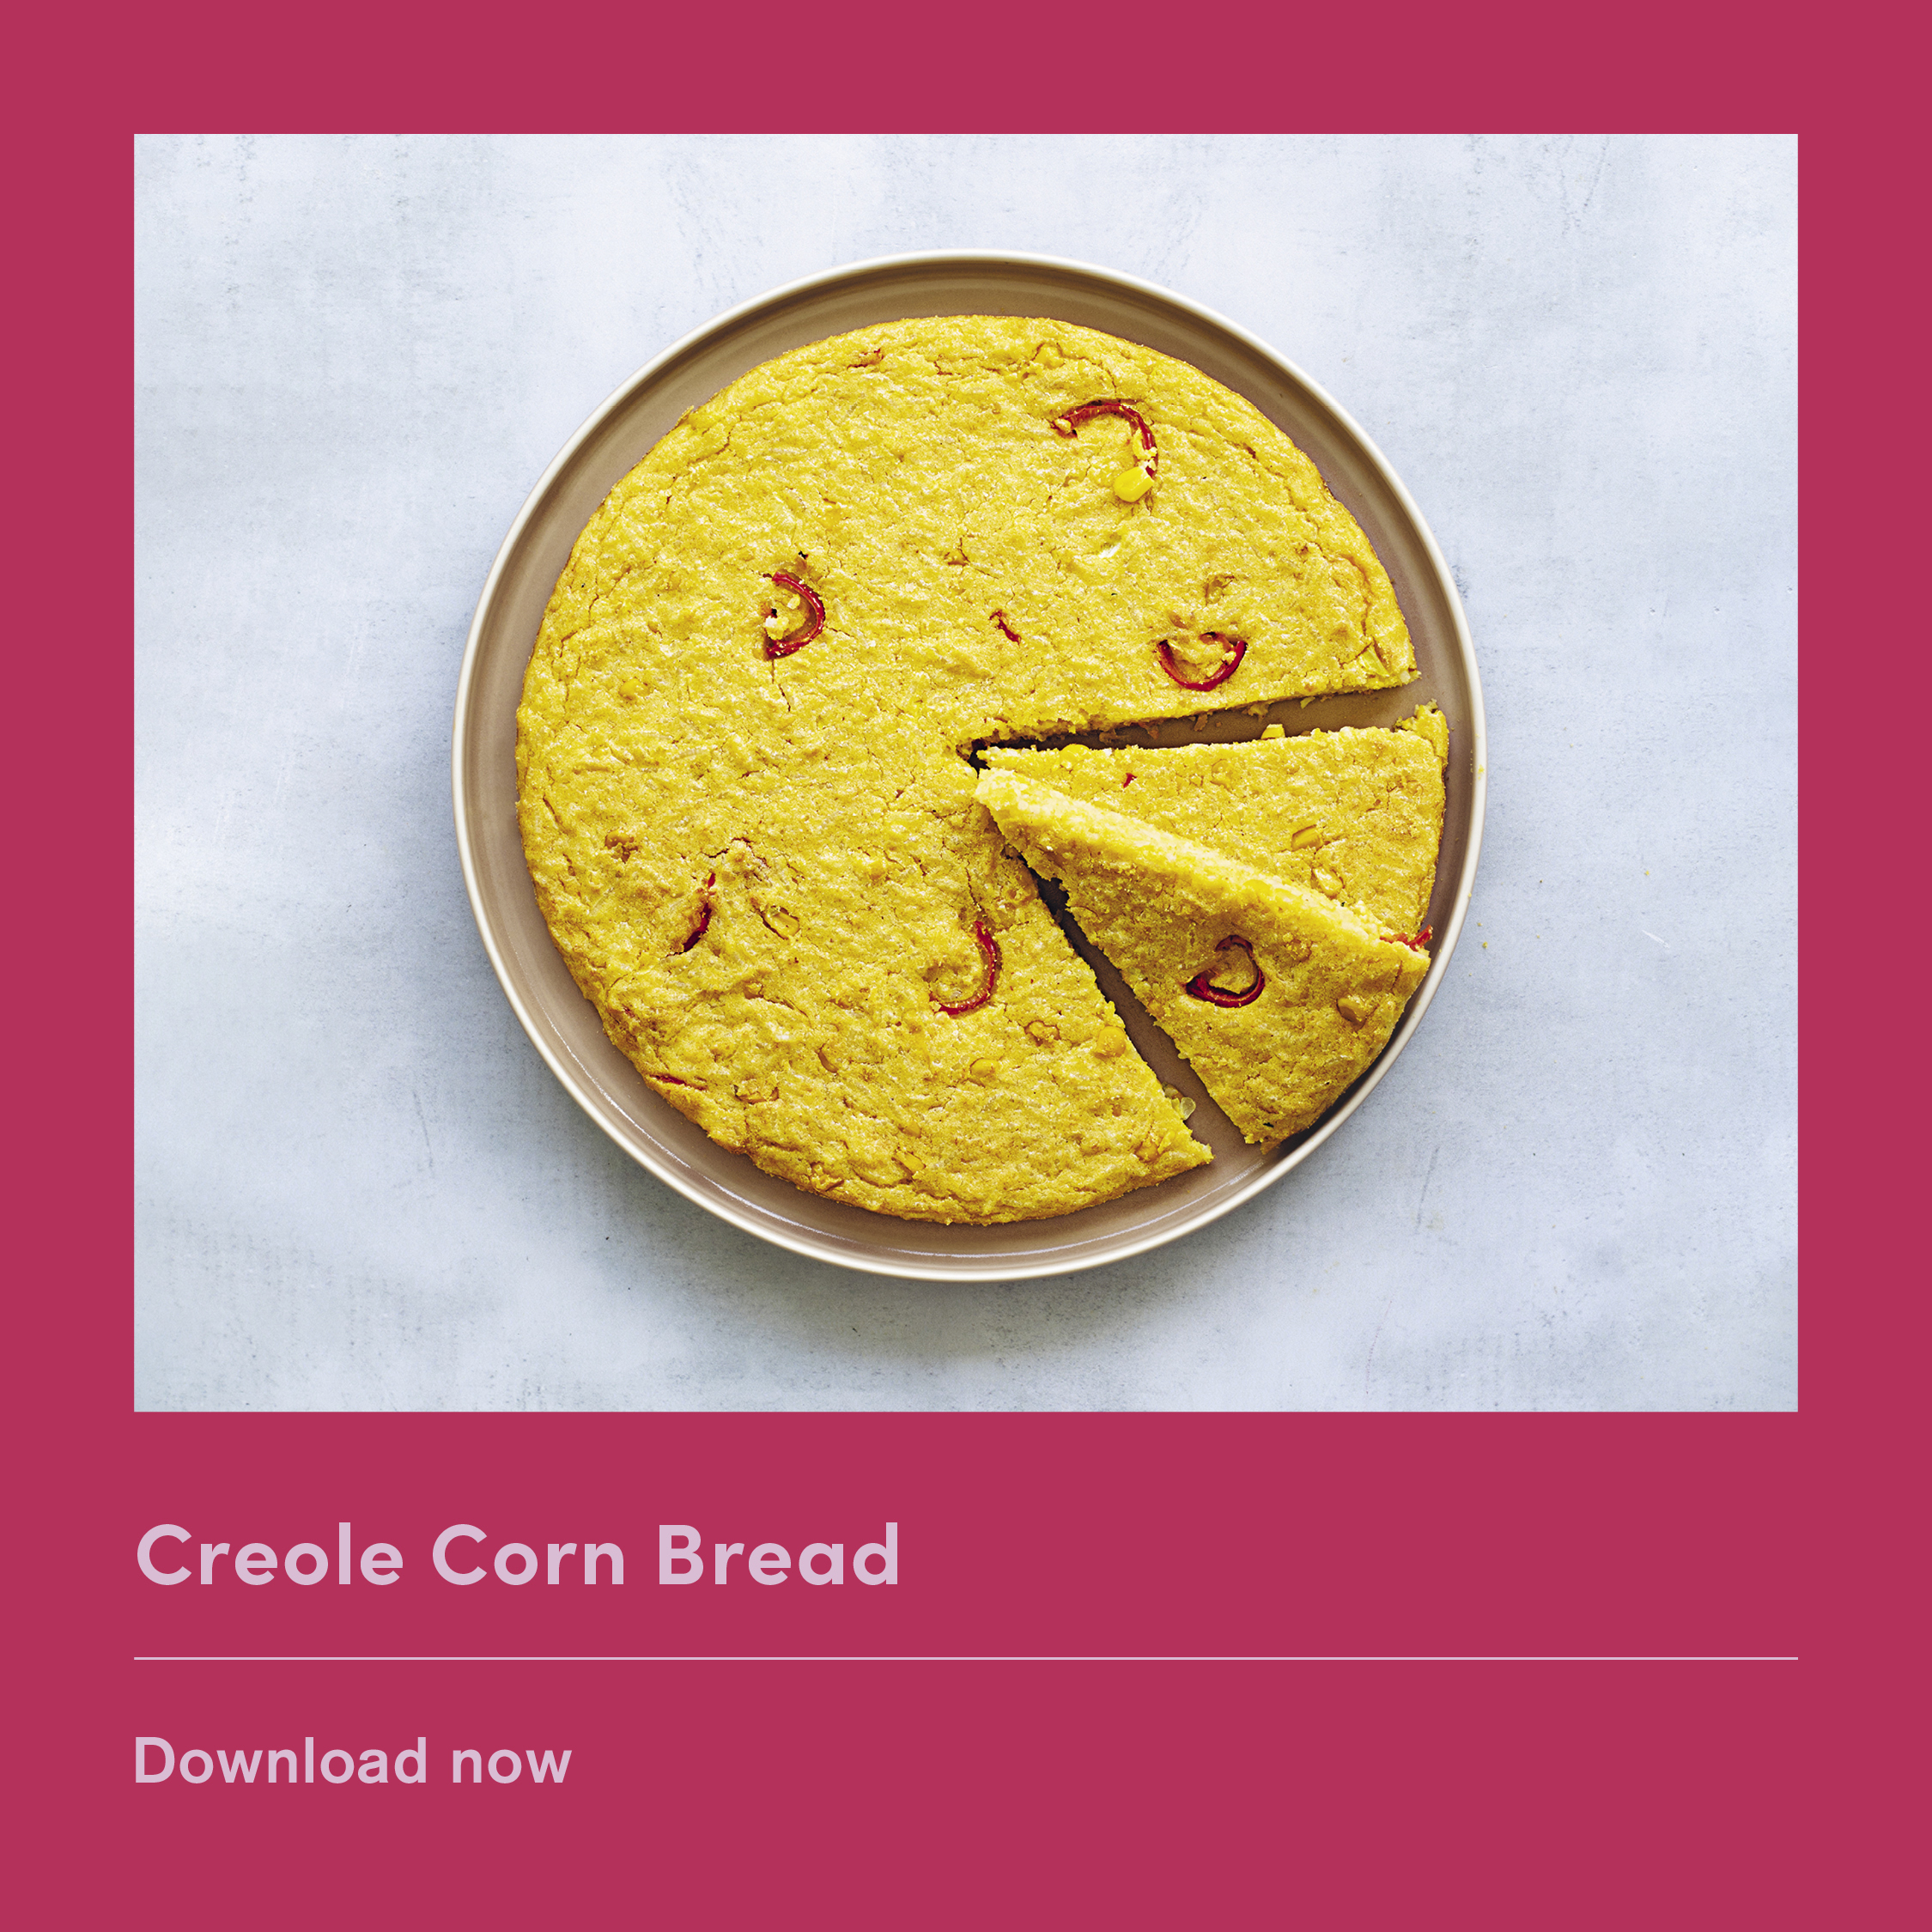 Creole Corn Bread Recipe Card